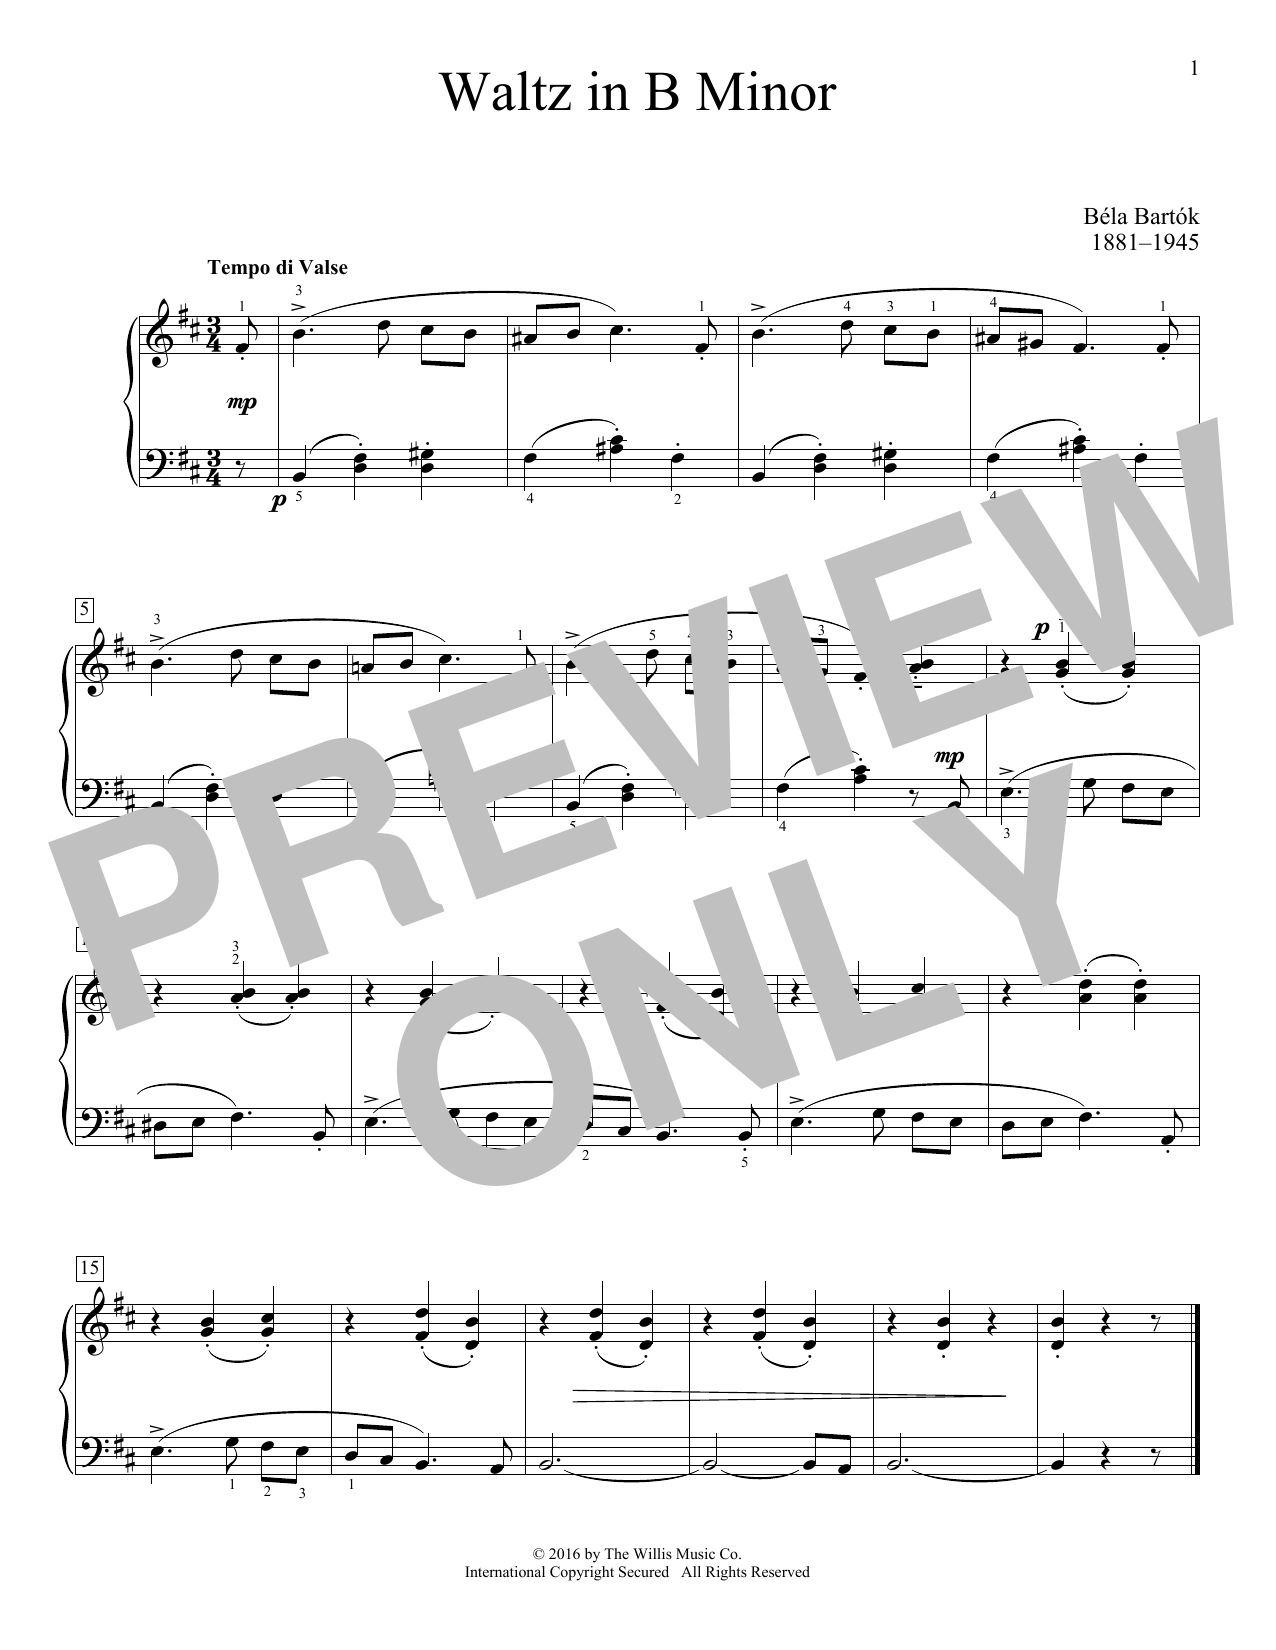 Download Bela Bartok Waltz In B Minor Sheet Music